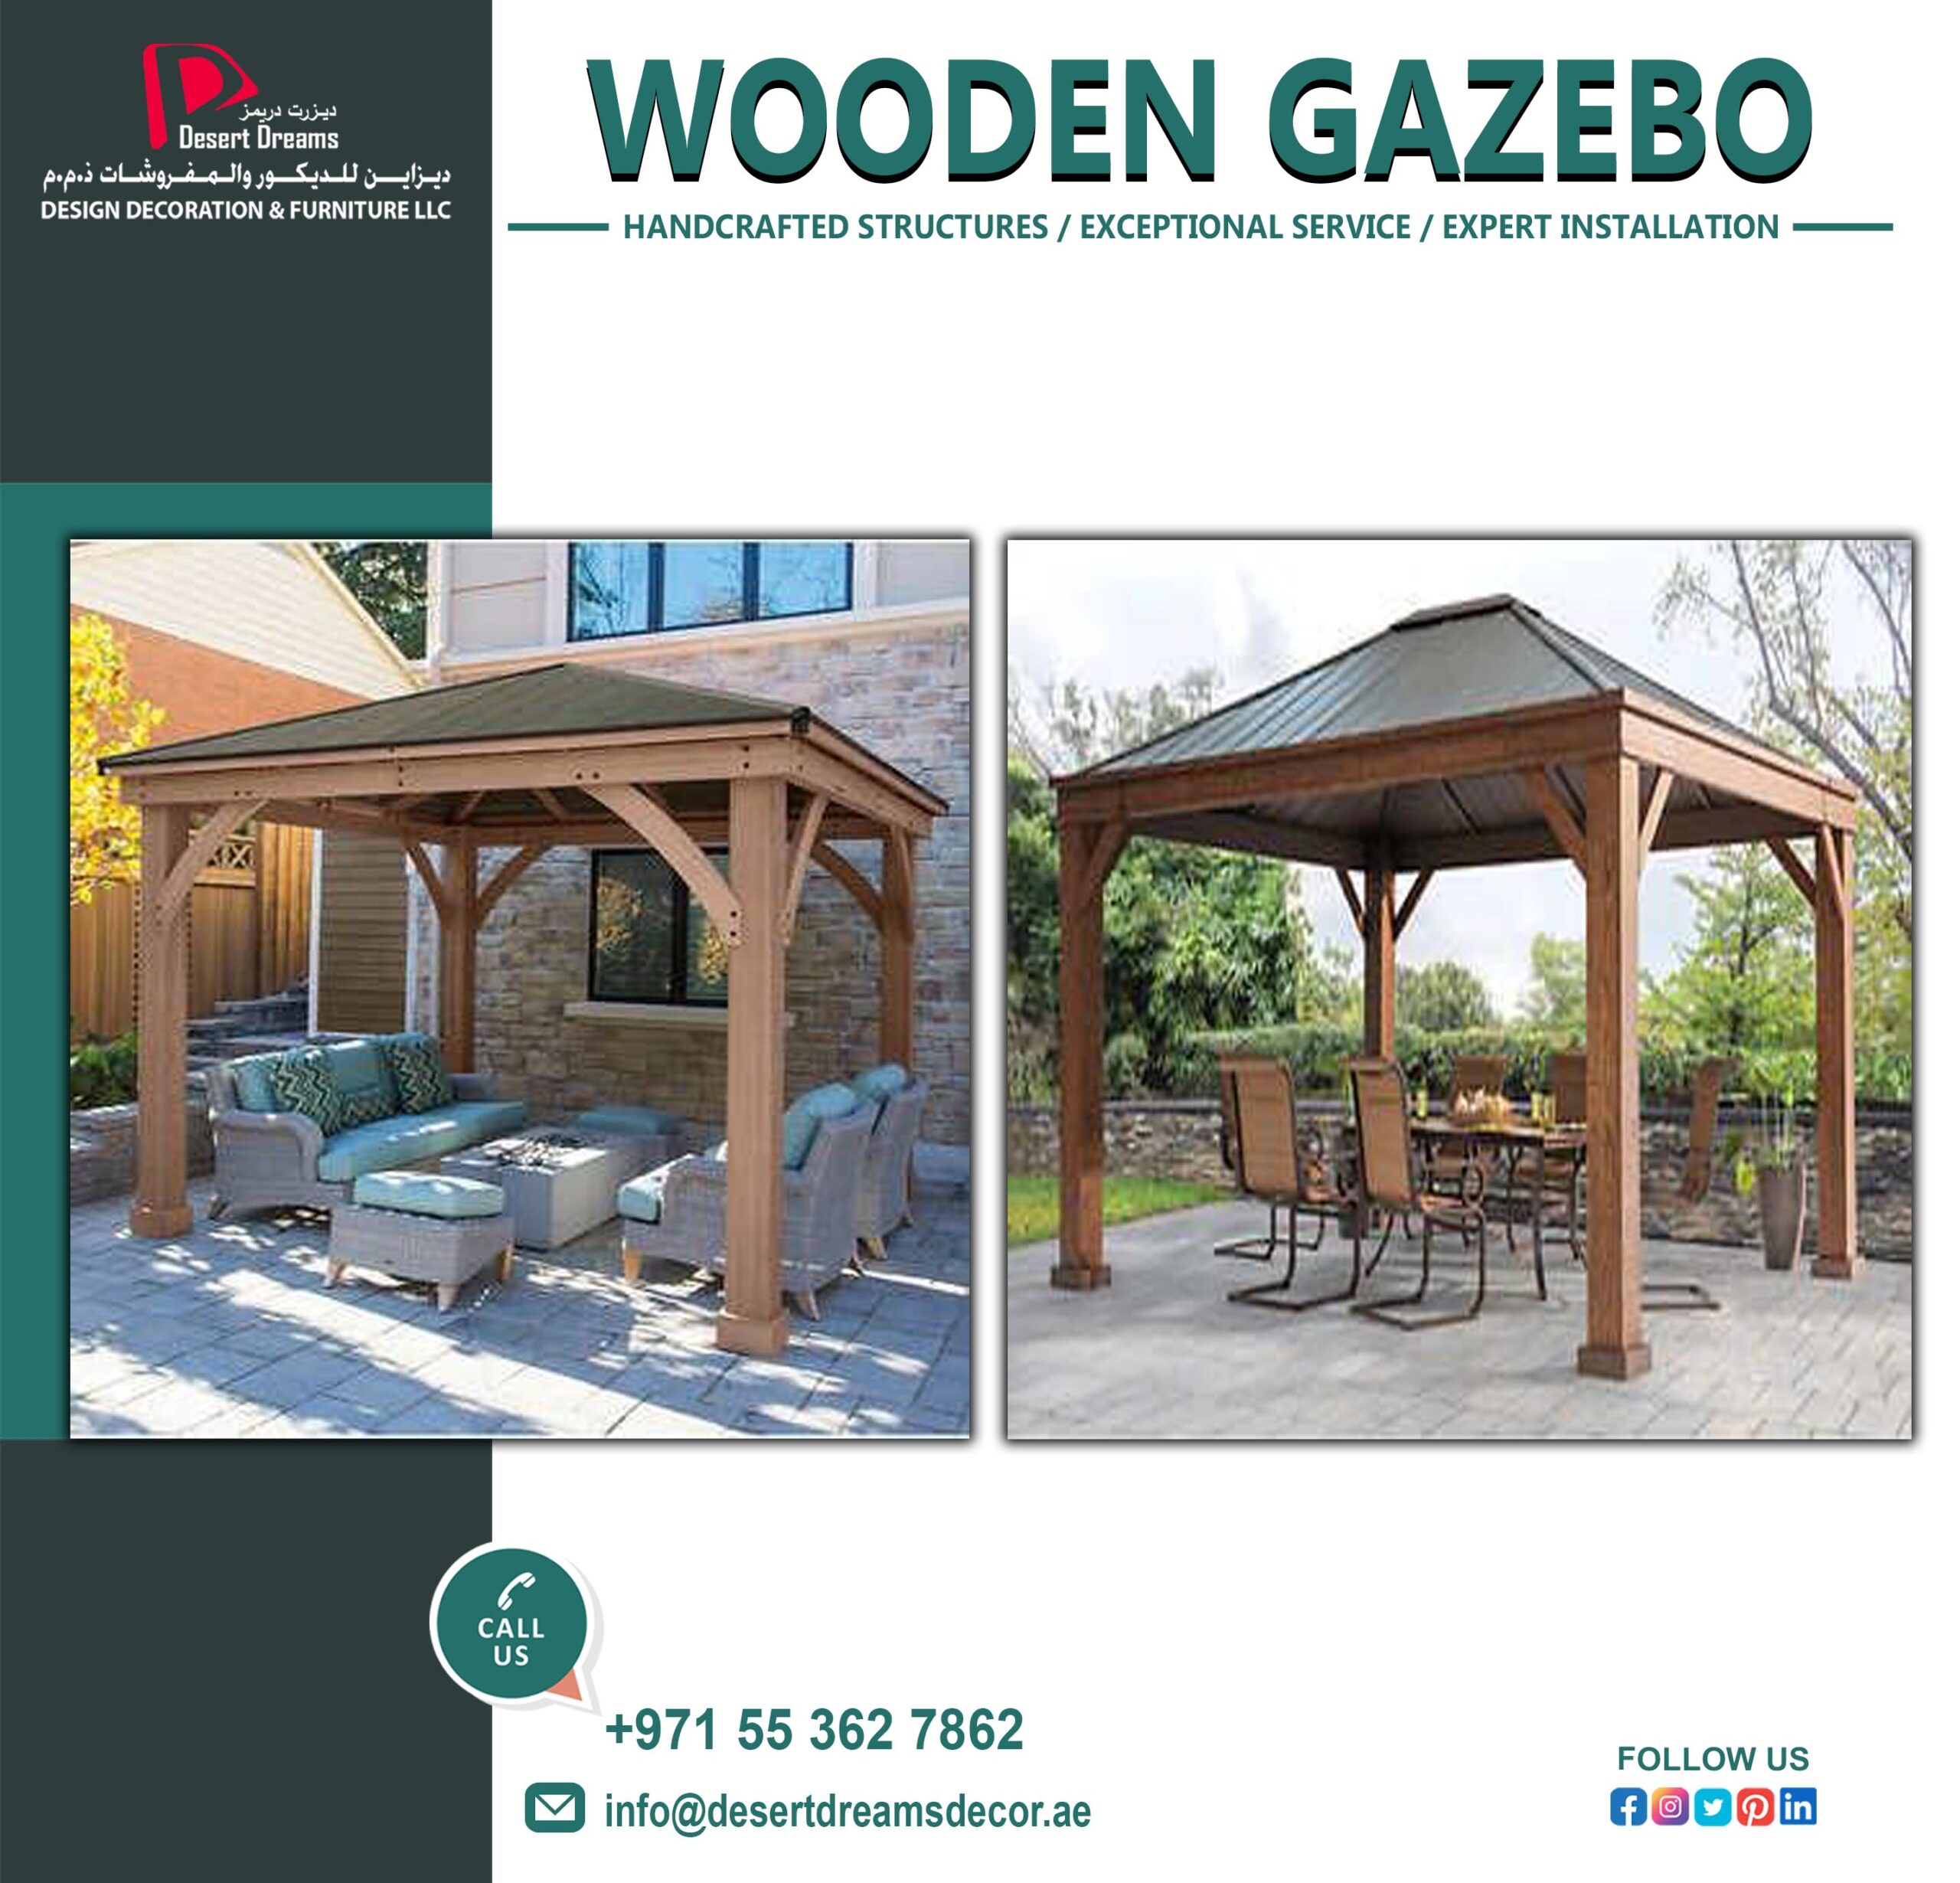 Supply and Install Wooden Gazebo in Dubai_Wooden Gazebo Abu Dhabi and Al Ain (2).jpg